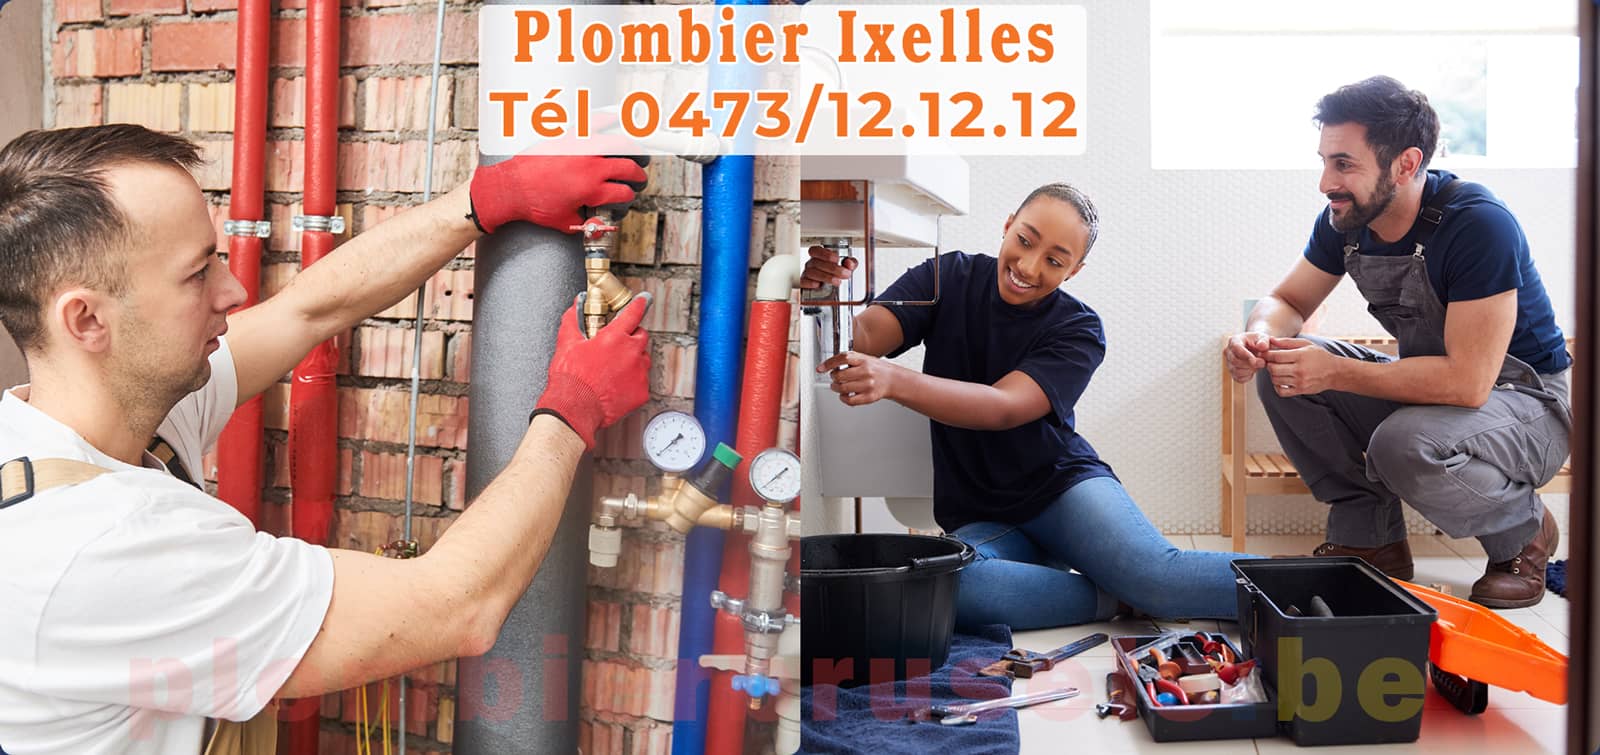 Plombier Ixelles service de Plomberie tél 0473/12.12.12